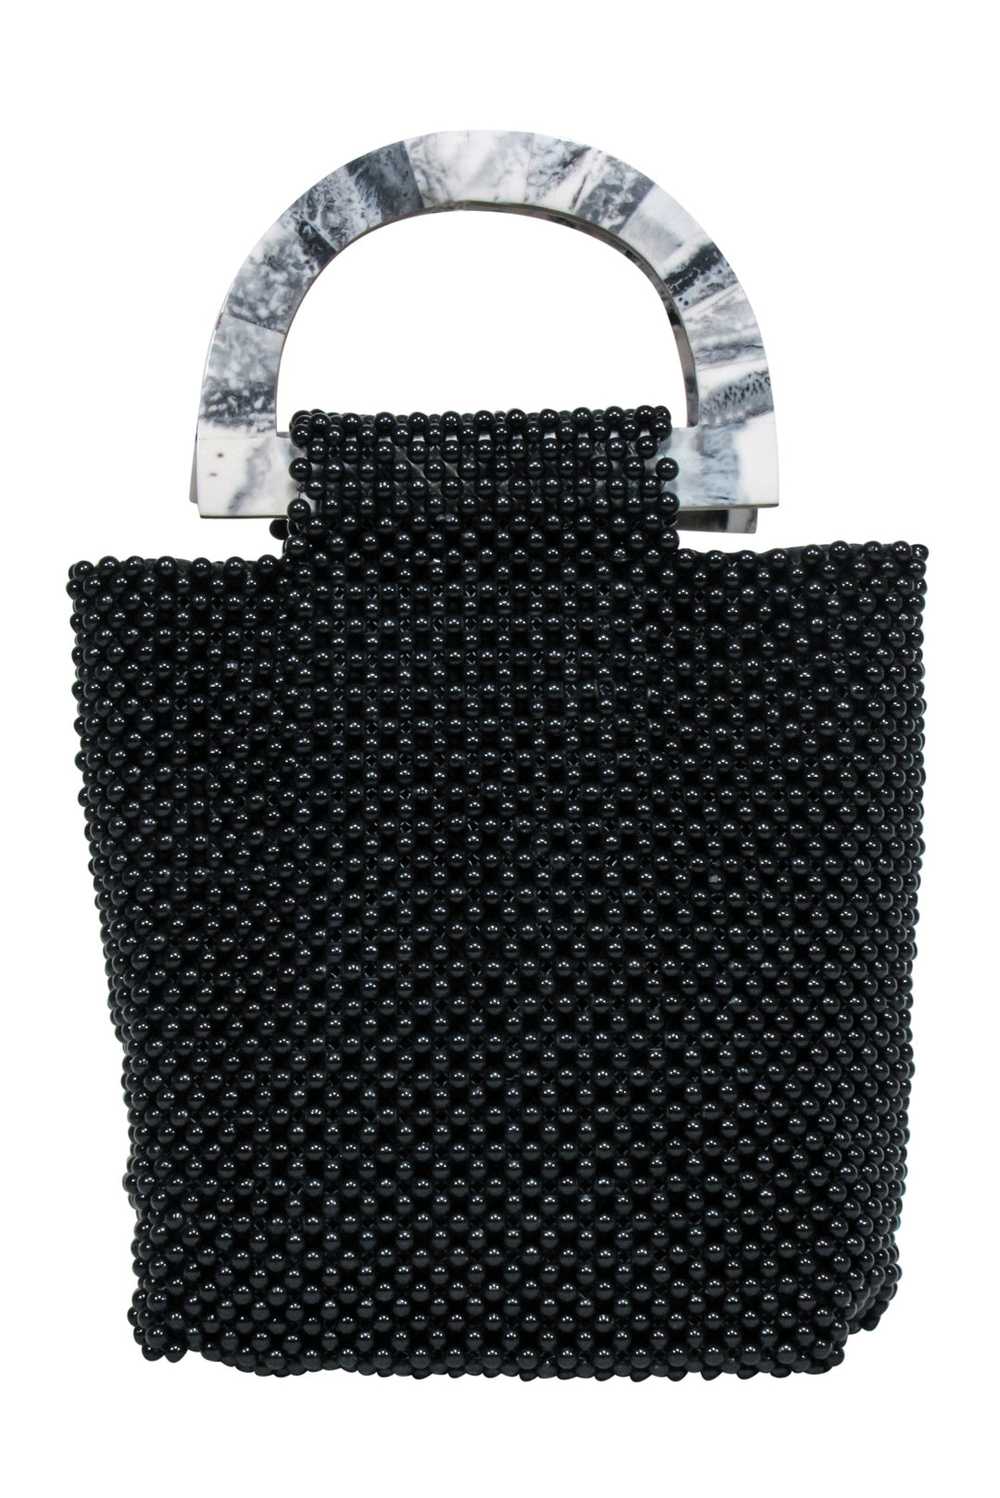 Cleobella - Black Beaded Handbag w/ Marble Handles - image 1